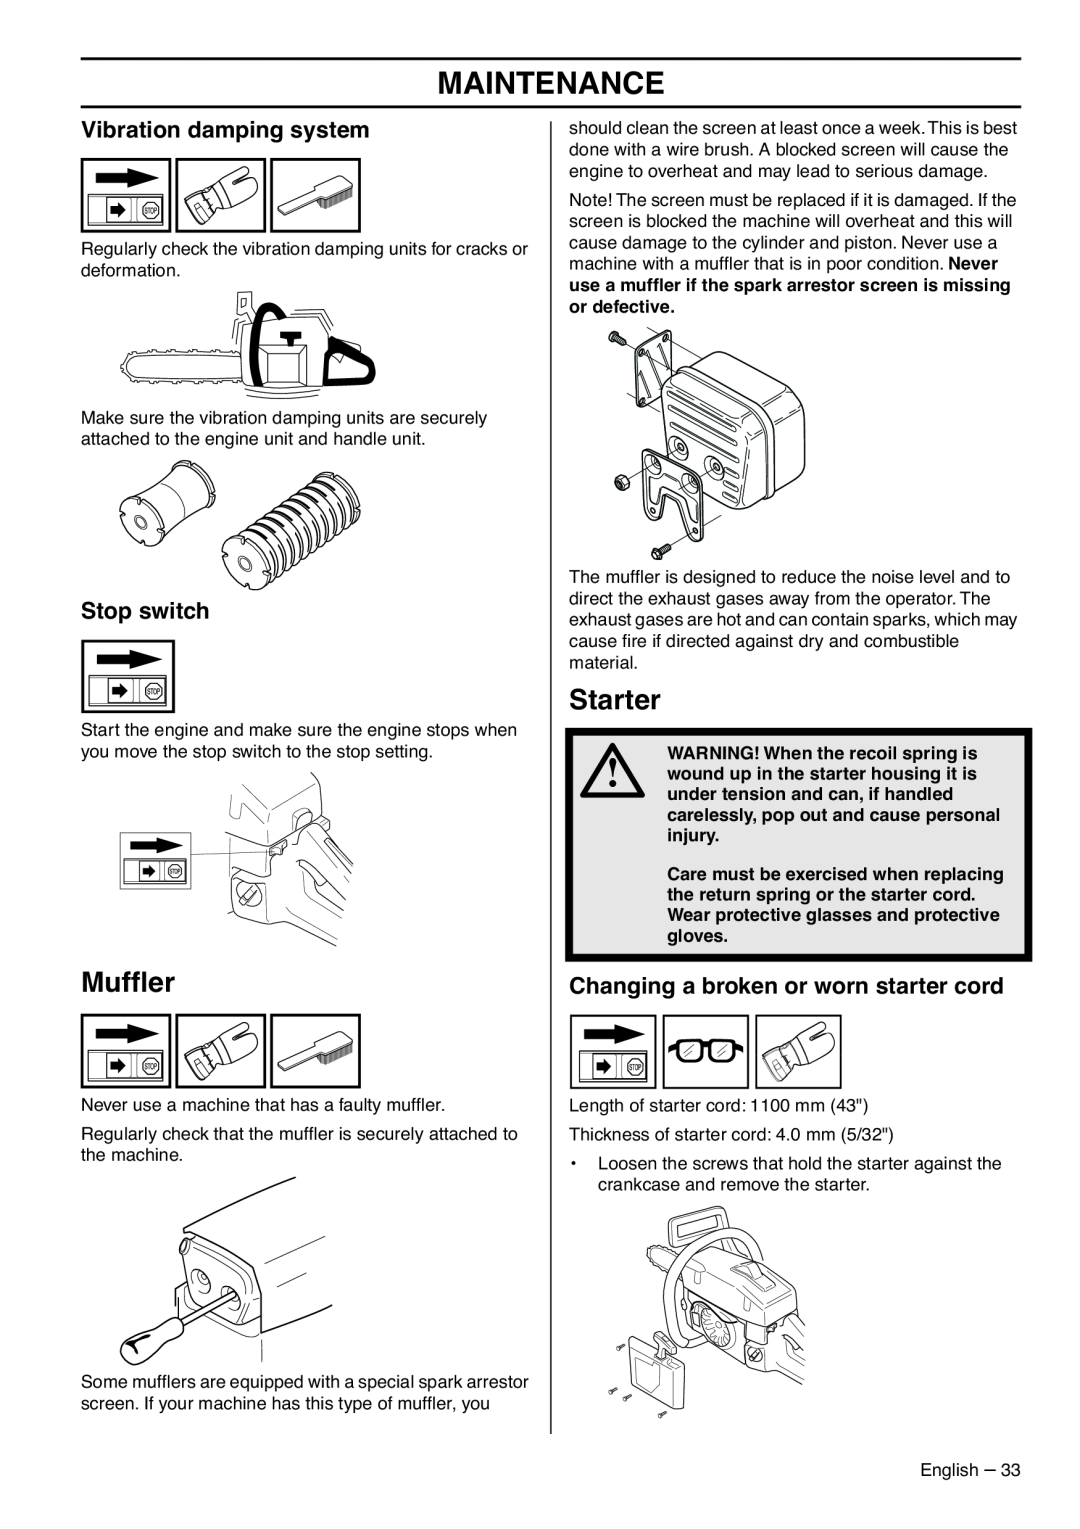 Husqvarna 1153183-95 manual Mufﬂer, Starter, Changing a broken or worn starter cord, Maintenance, Vibration damping system 